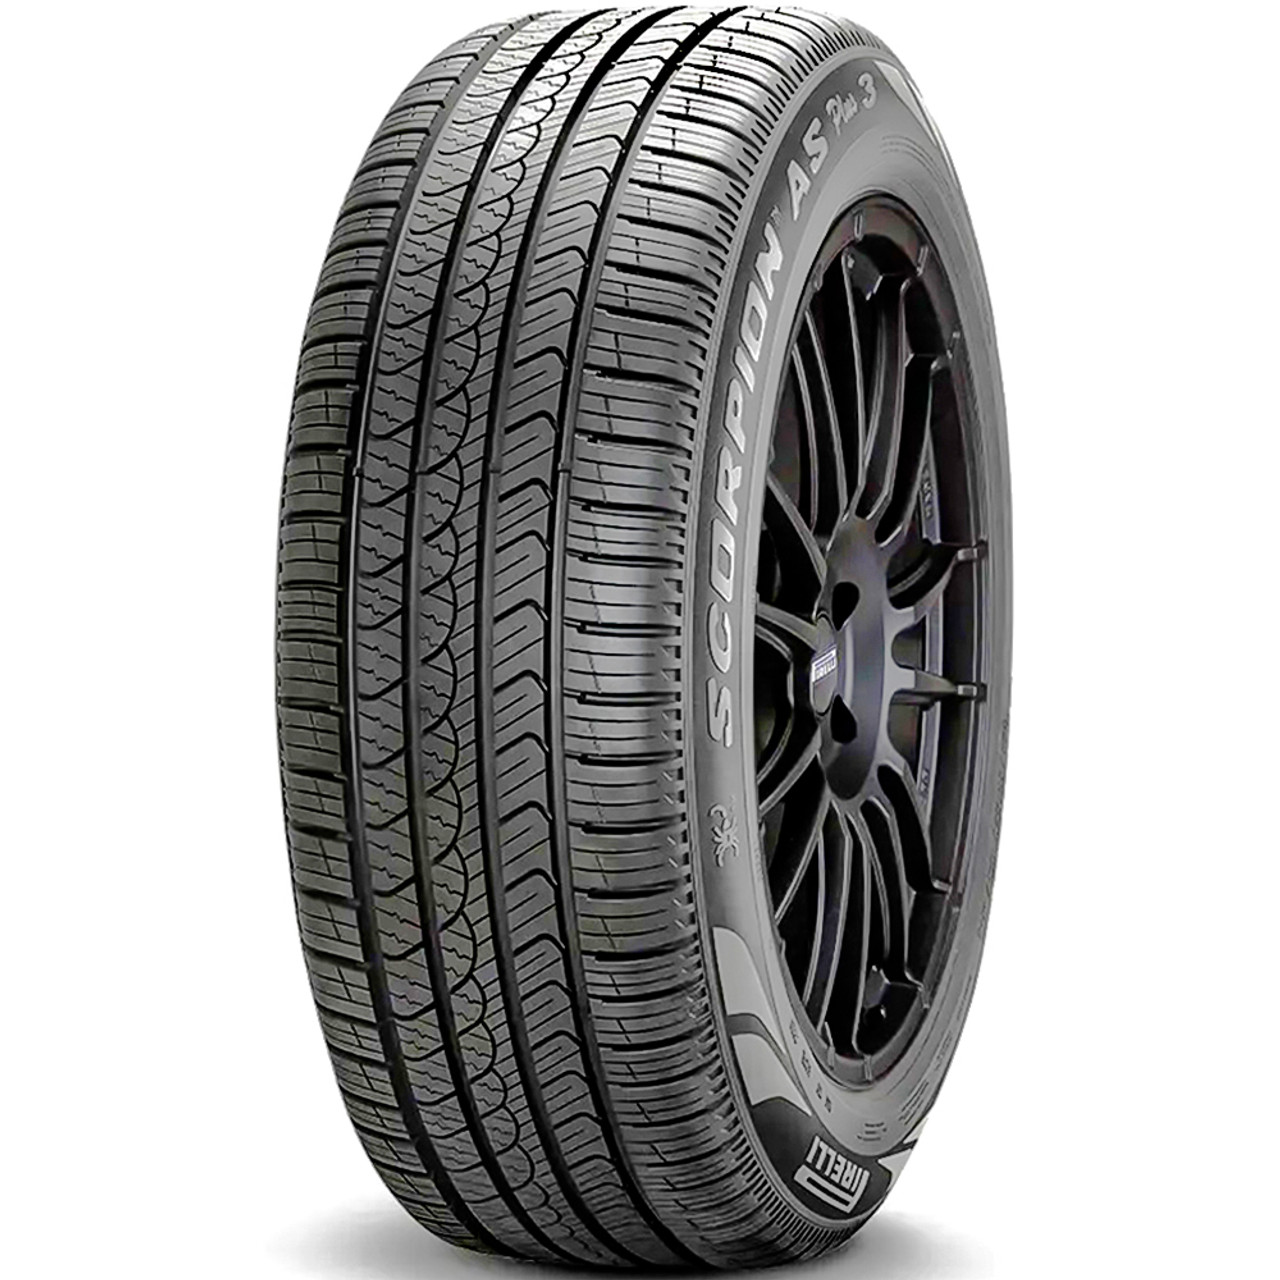 Pirelli Scorpion AS Plus 3 225/60R18 100H A/S All Season Tire